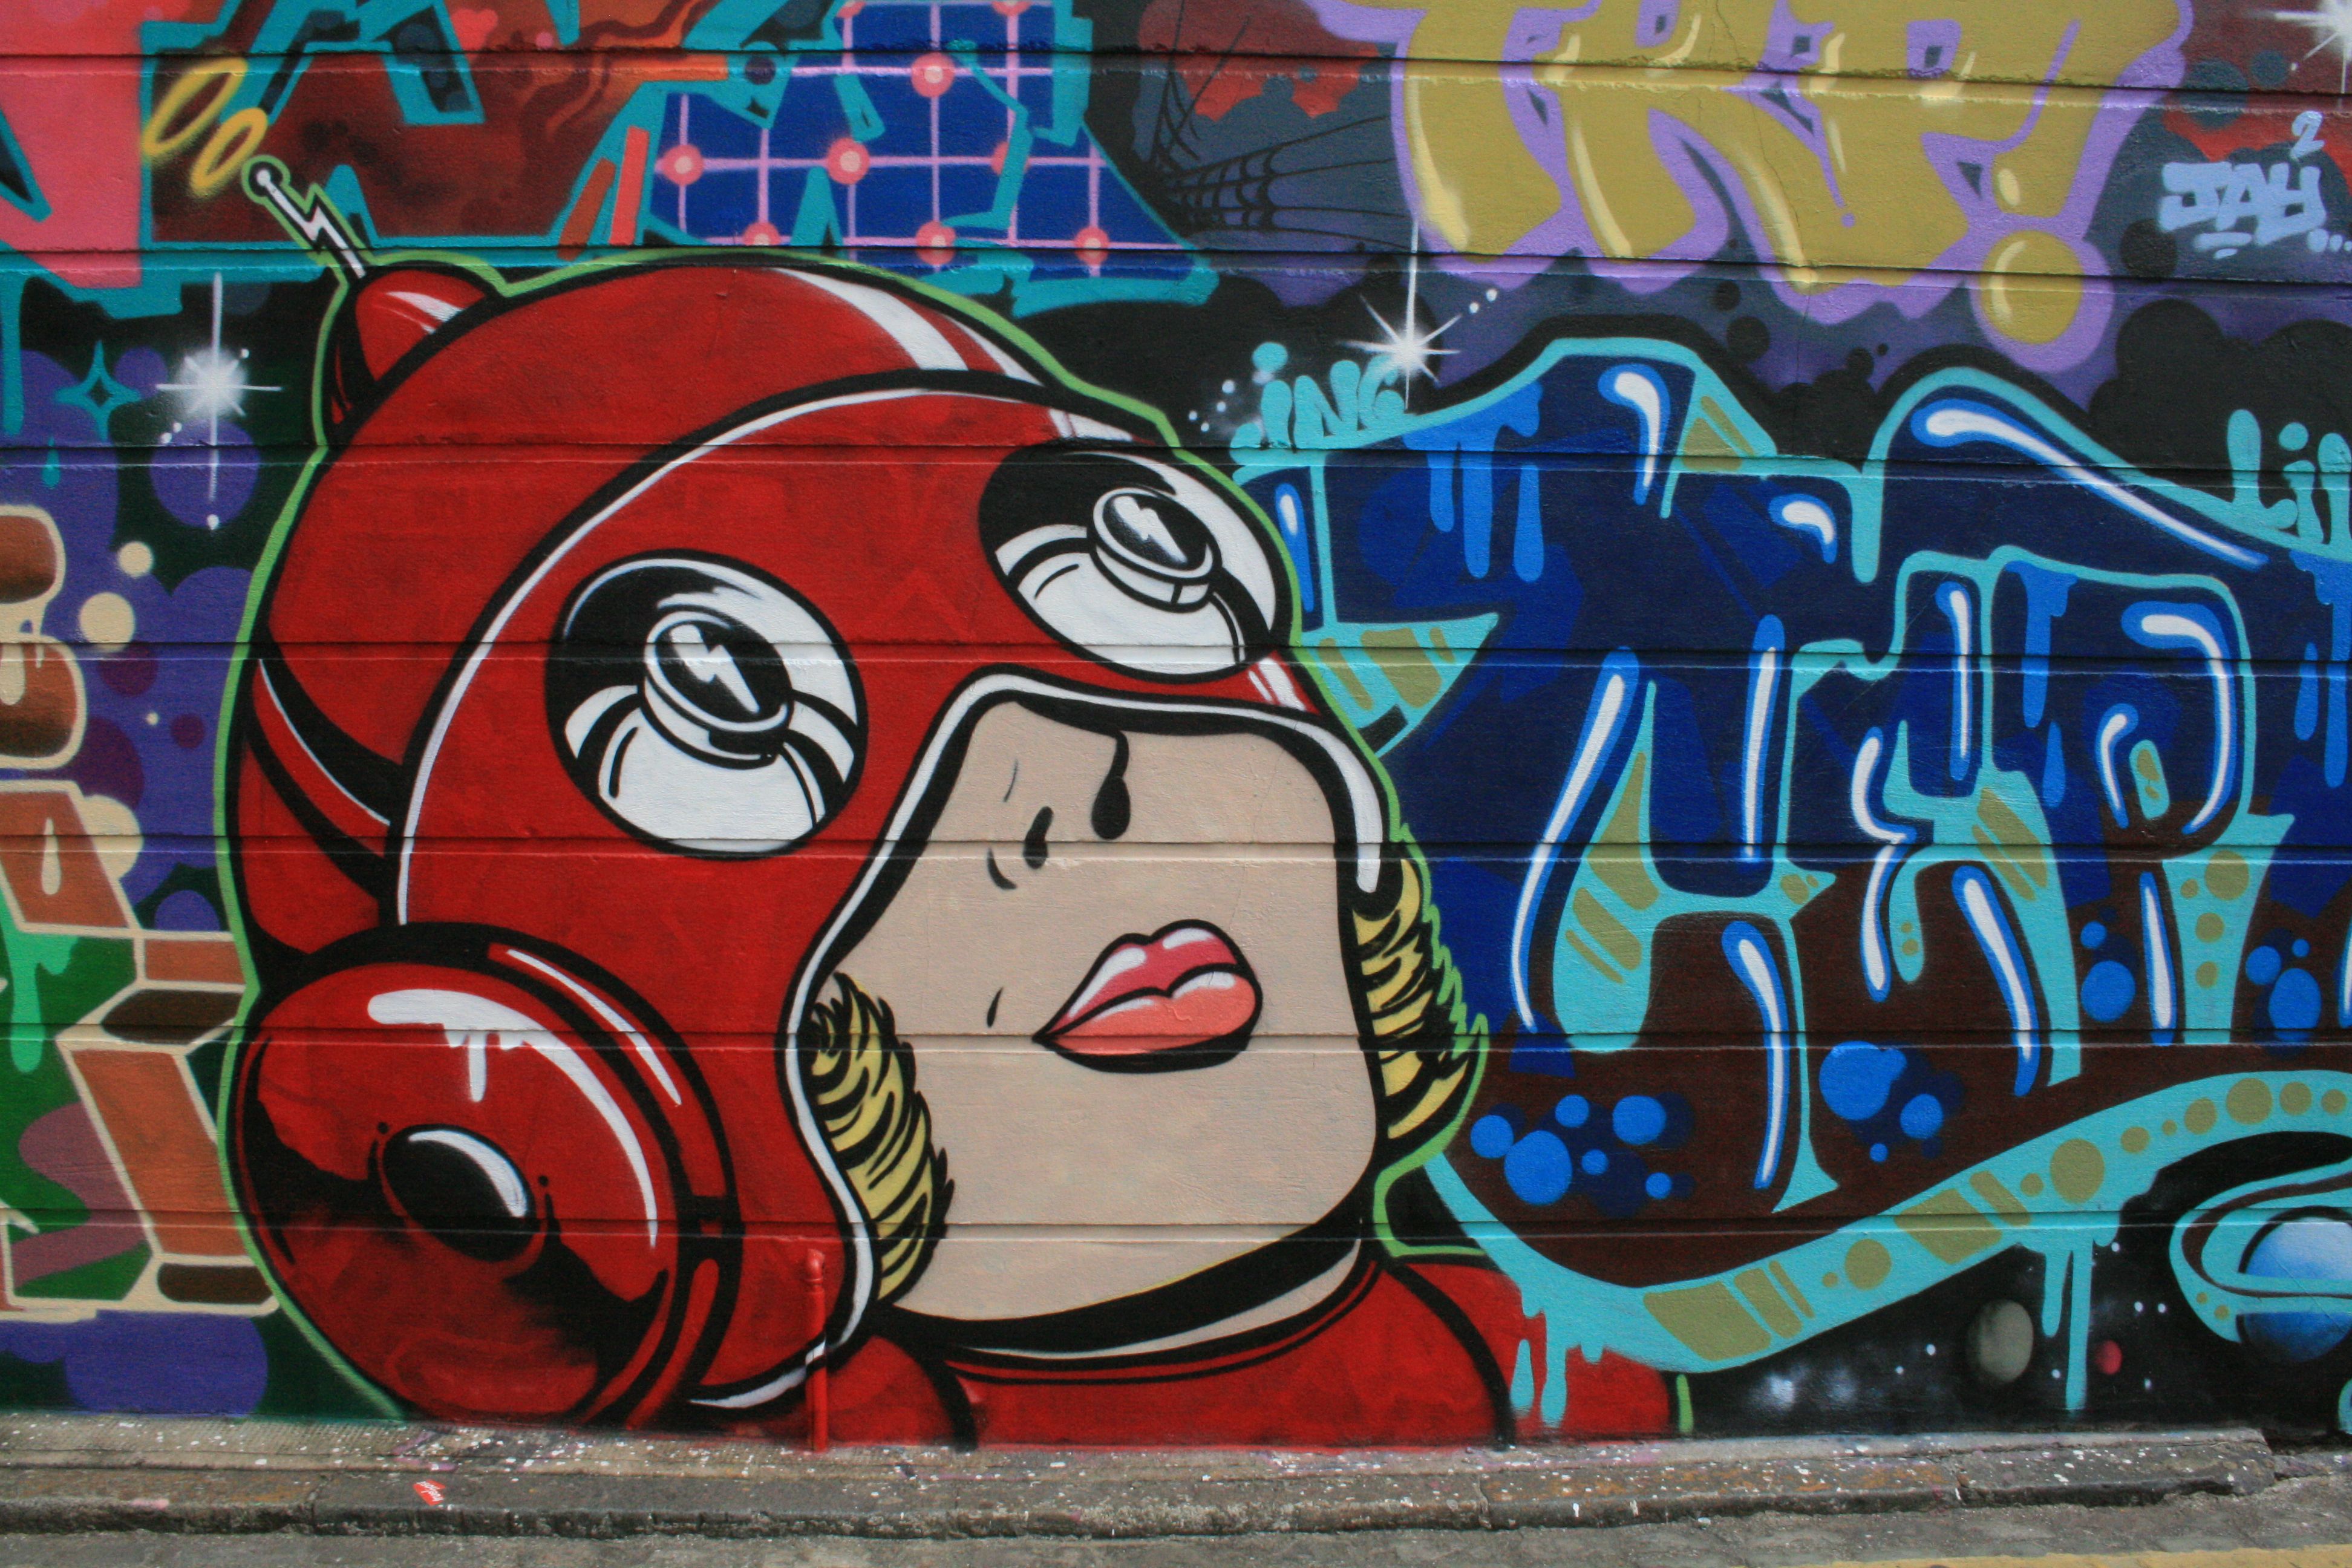 Graffiti_in_Shoreditch,_London_-_CEPT_(13804882184).jpg